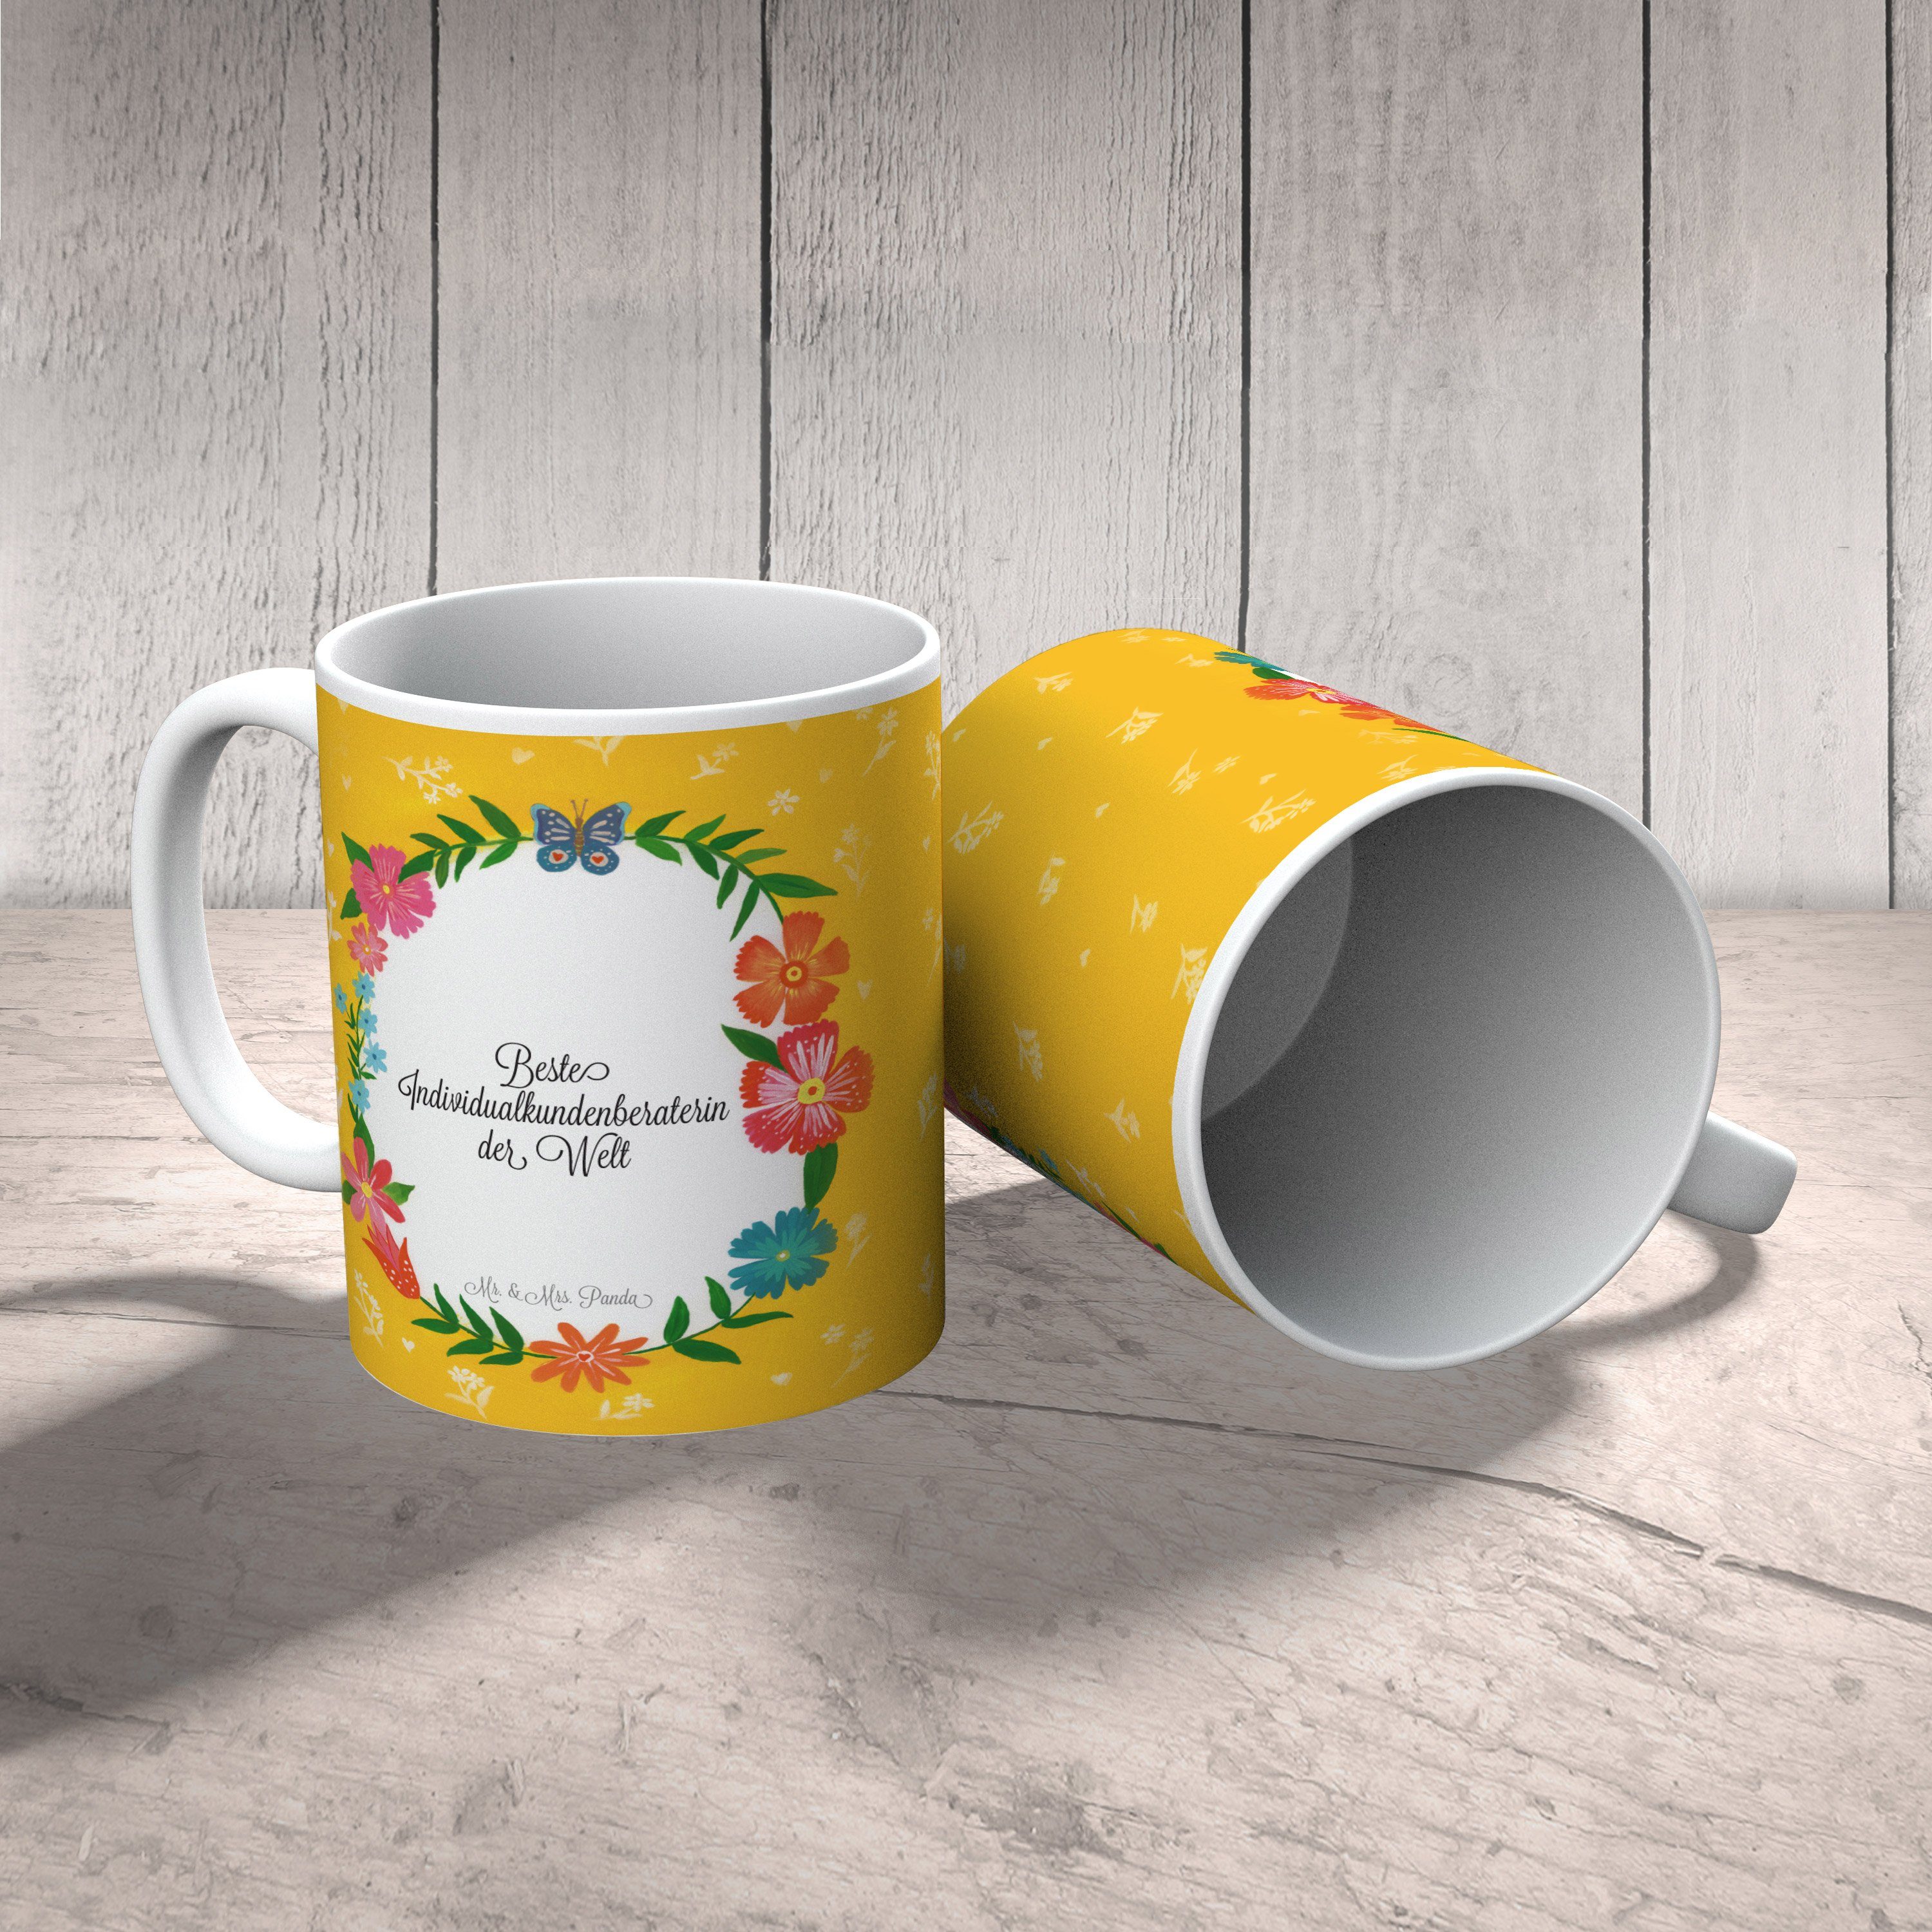 Mr. & Panda Keramik - Porzellant, Mrs. Studium, Geschenk, Tasse Individualkundenberaterin Ausbildung